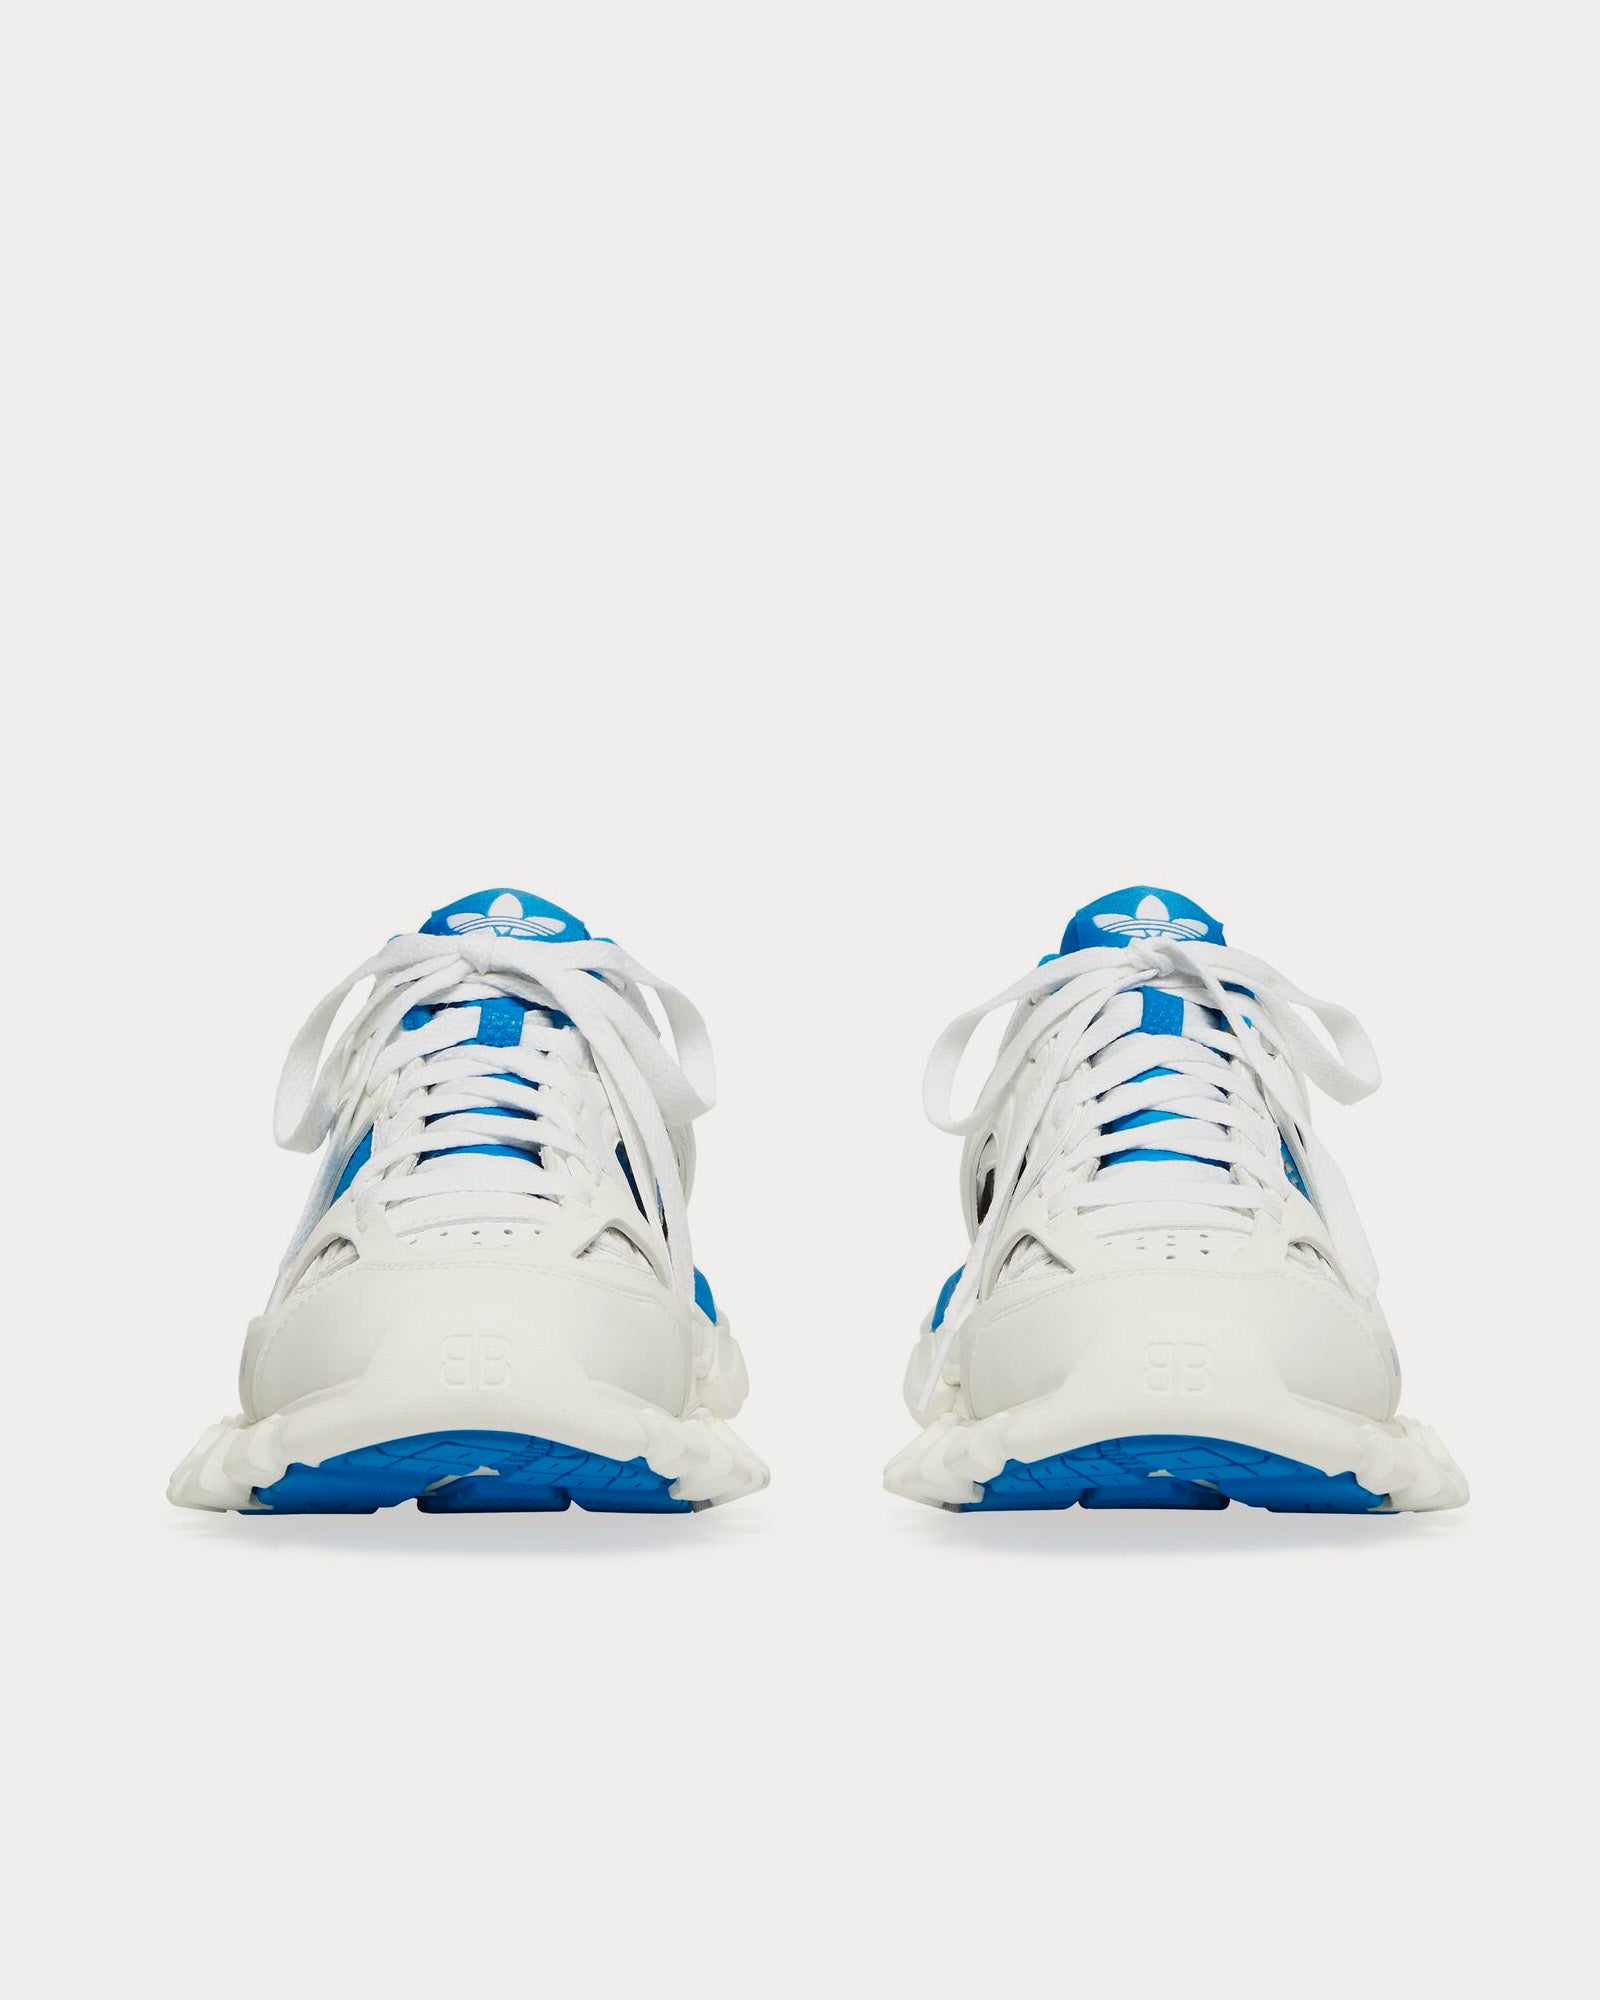 Balenciaga x Adidas - Track Forum White / Blue Low Top Sneakers